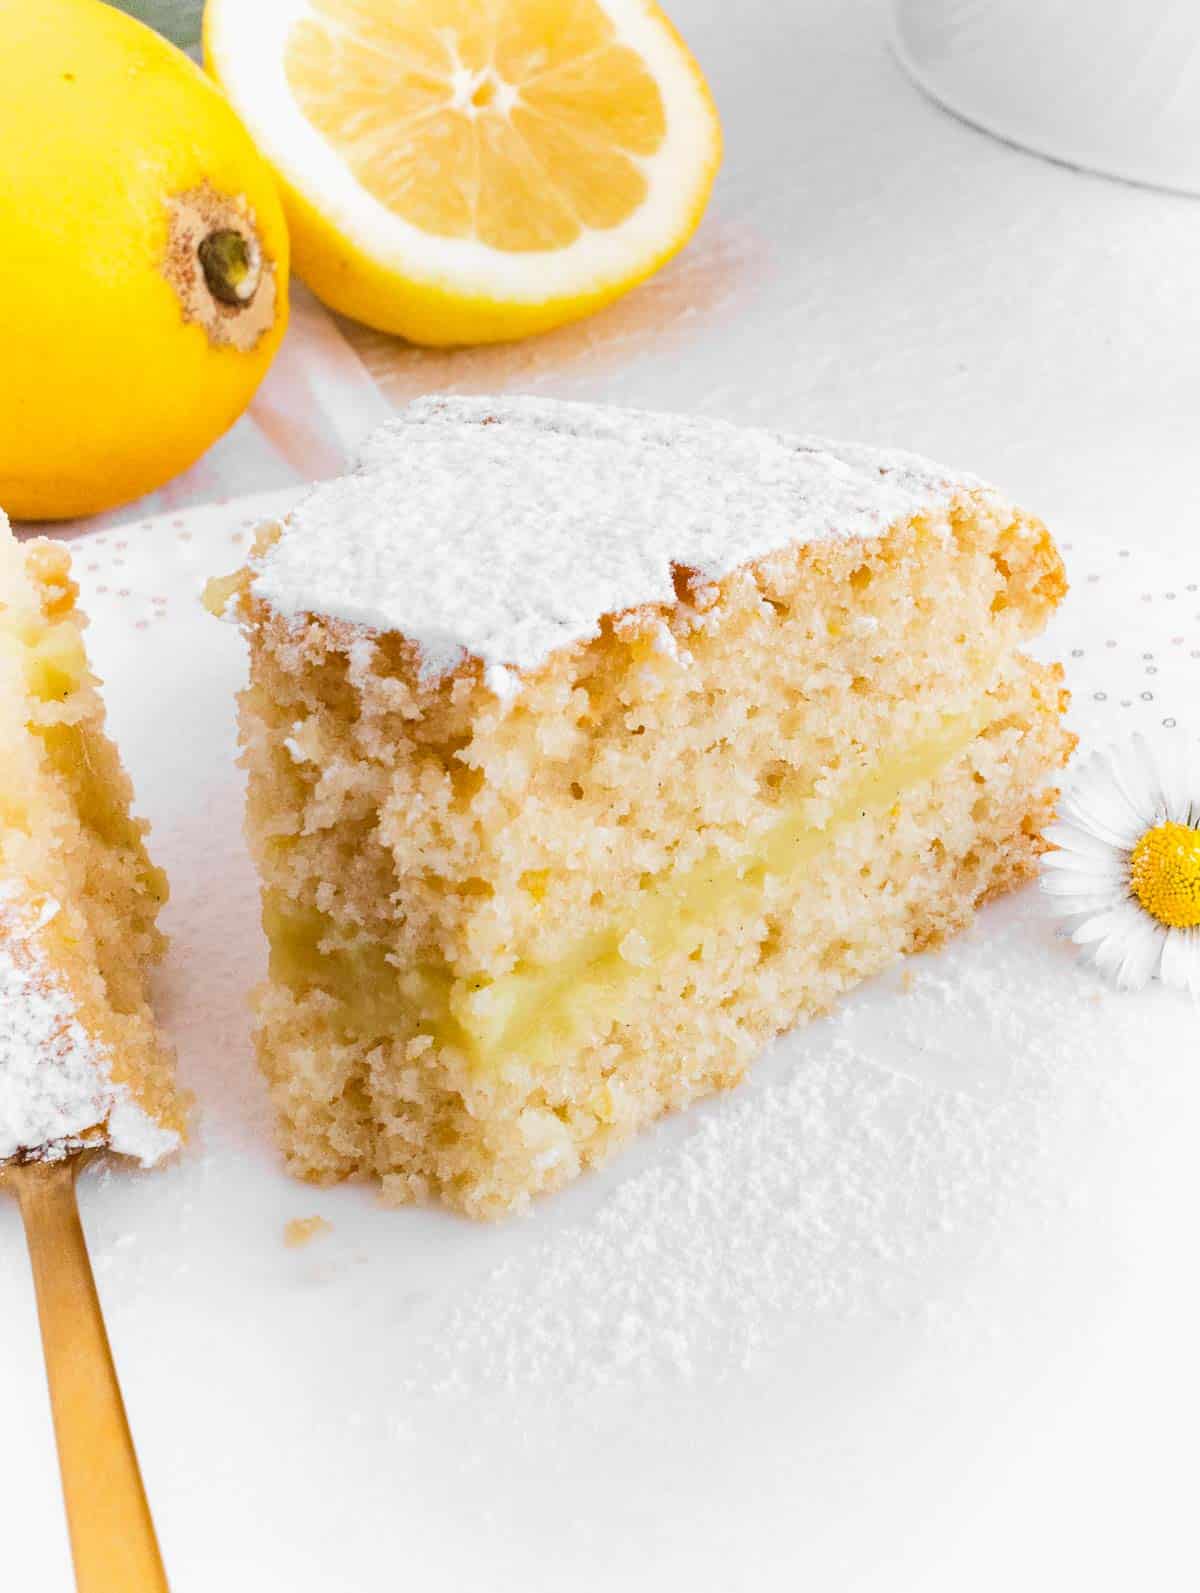 slice of vegan lemon cake with custard filling